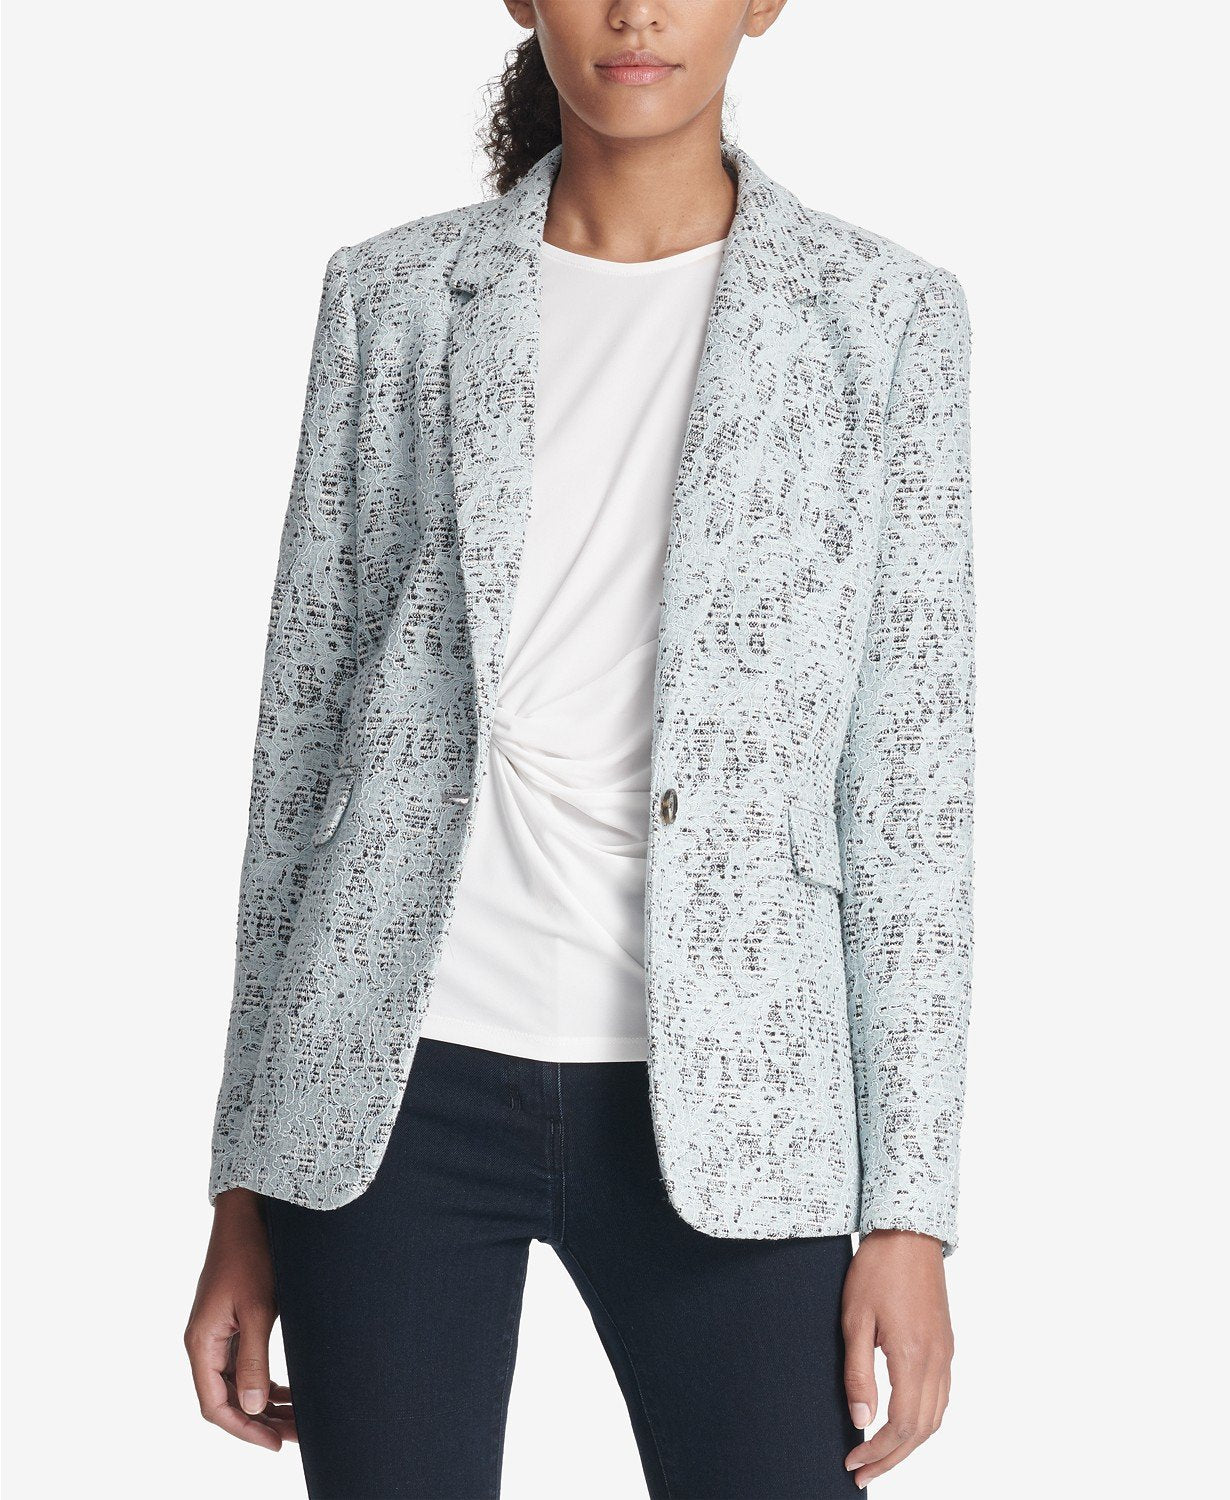 Dkny Bonded Lace One-Button Jacket - TopLine Fashion Lounge